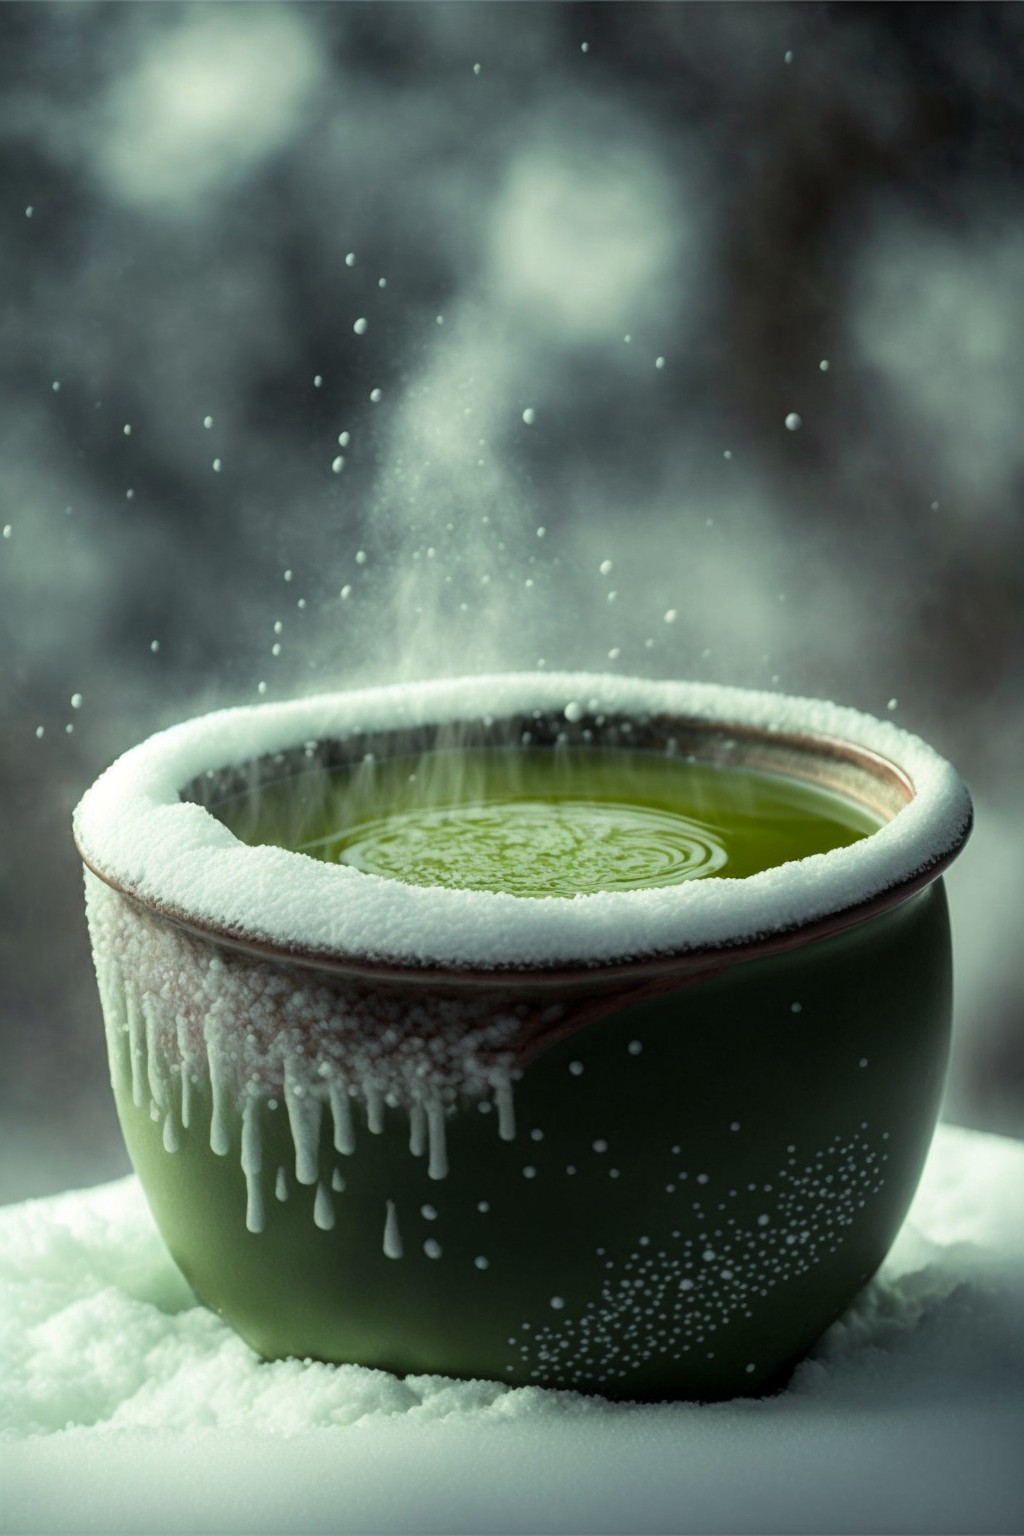 Green Tea and Green Tea Ice Cream in a Snowstorm